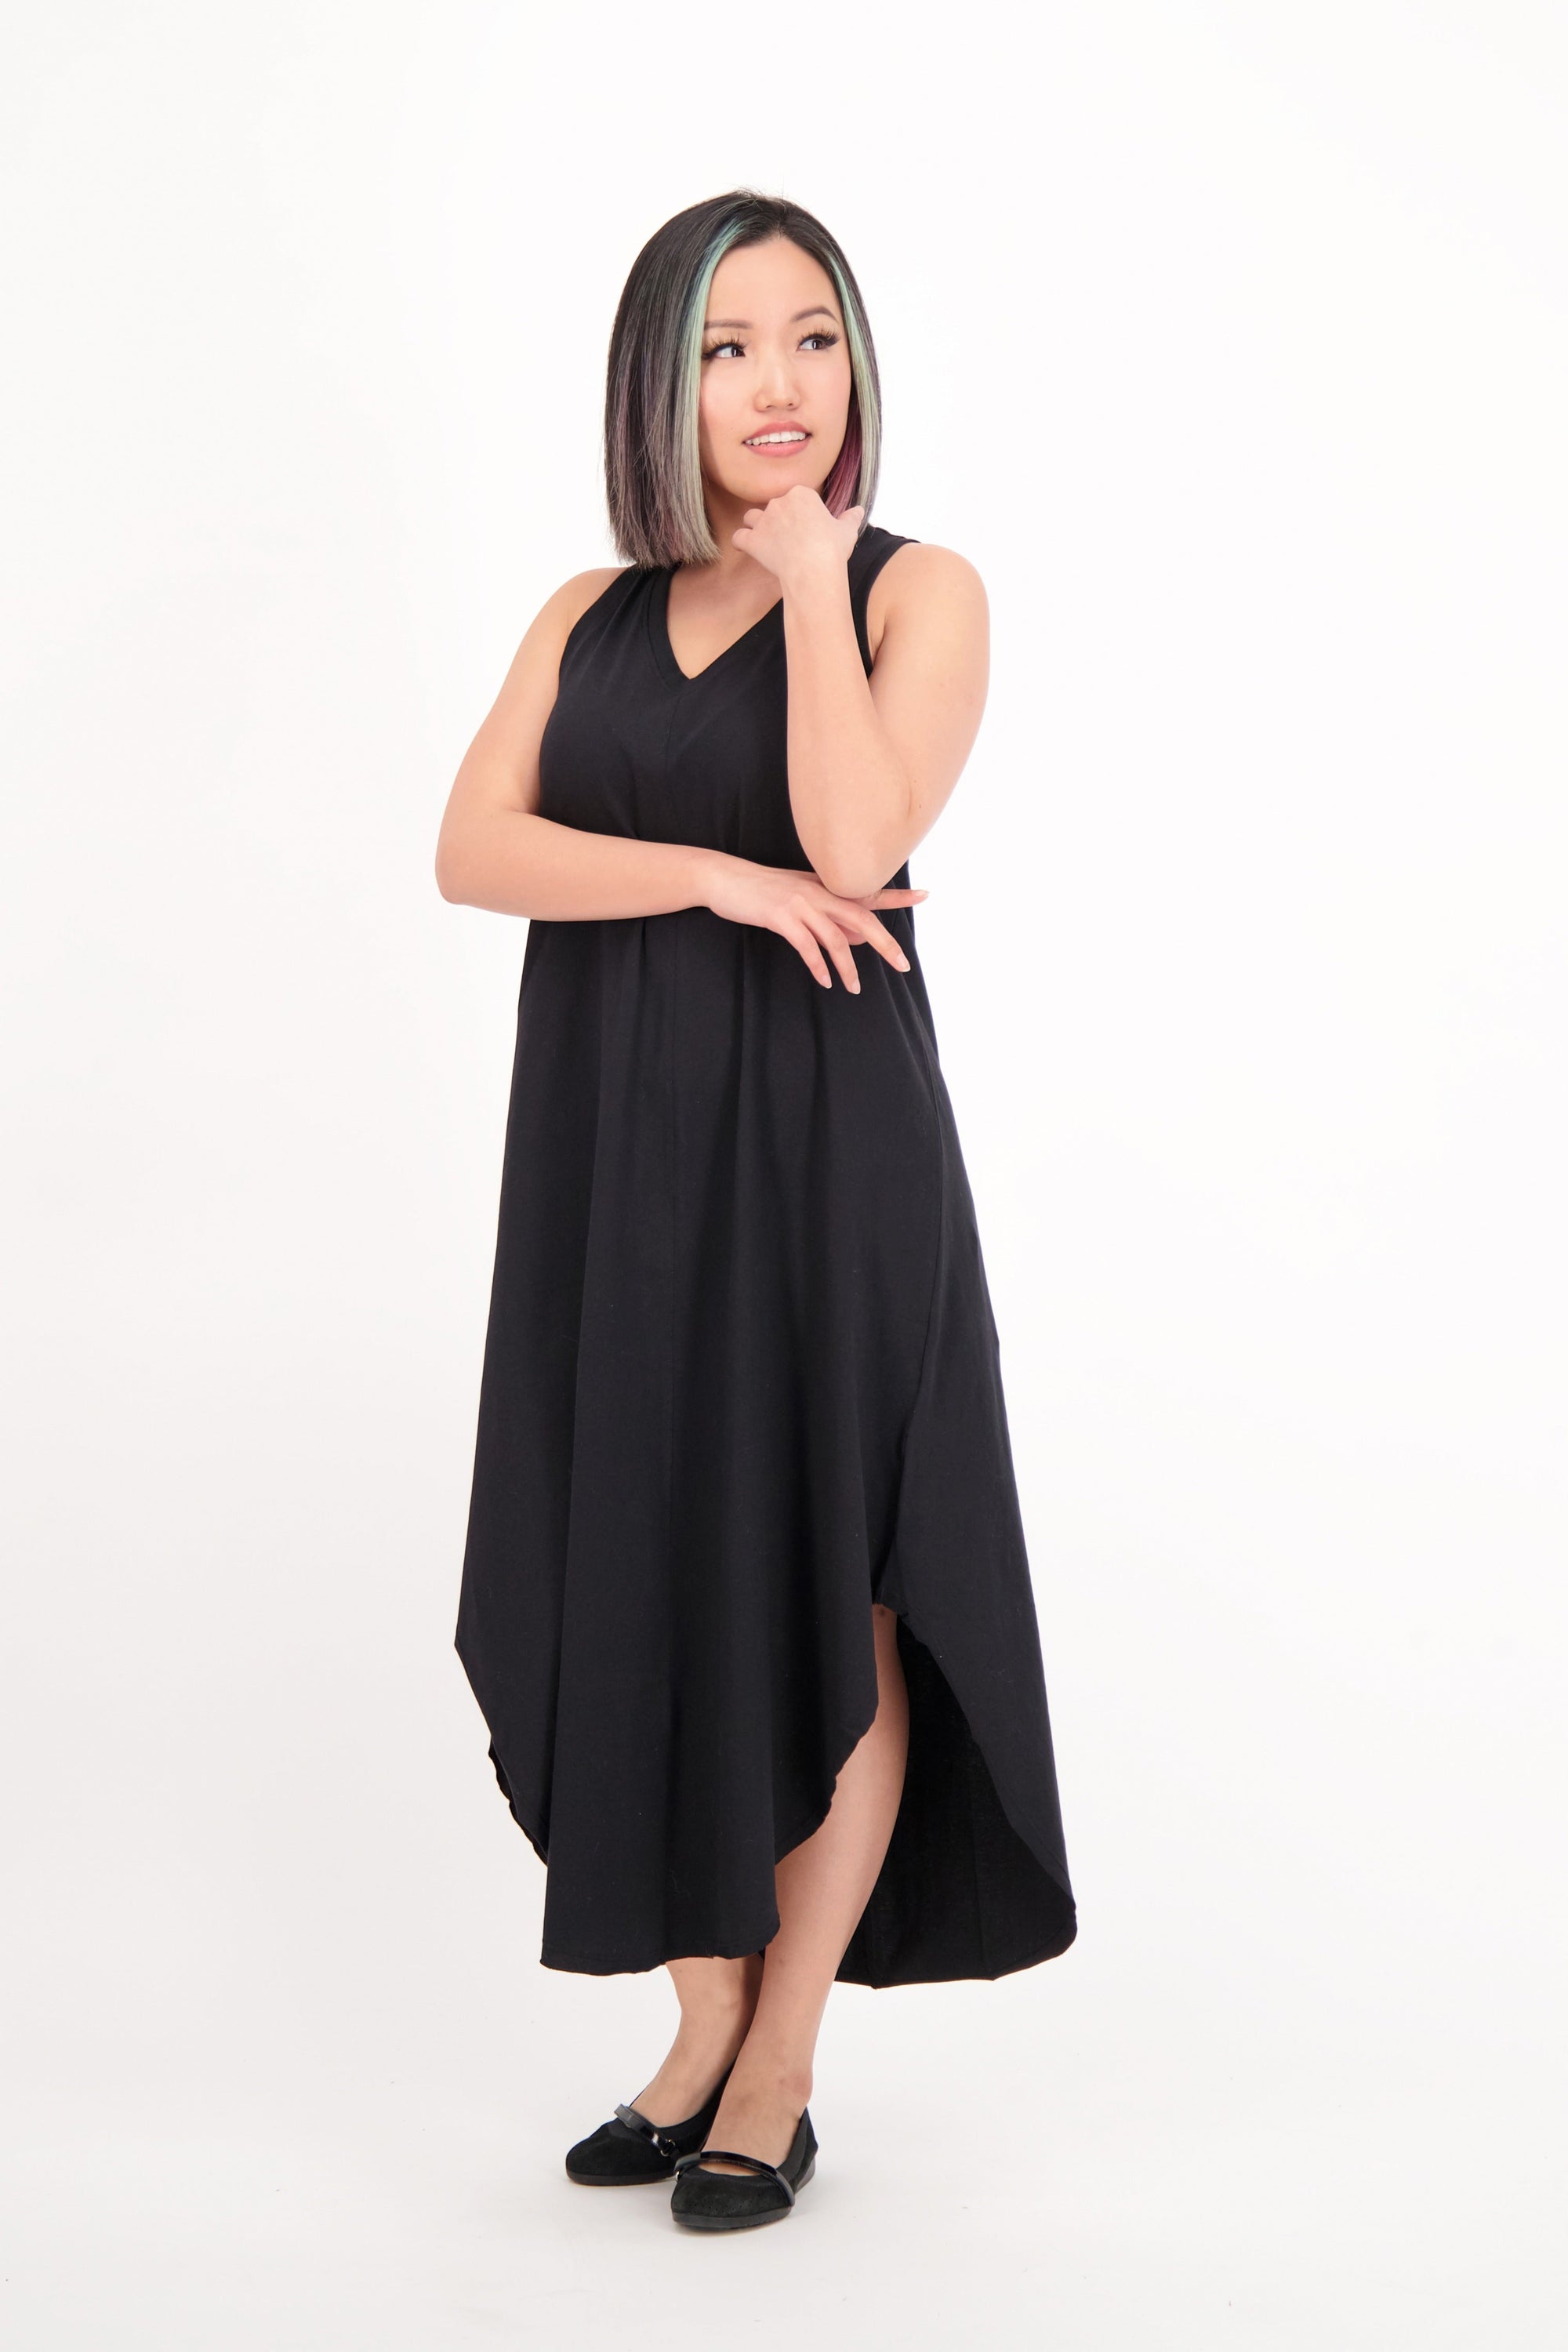 Black sleeveless fairtrade dress